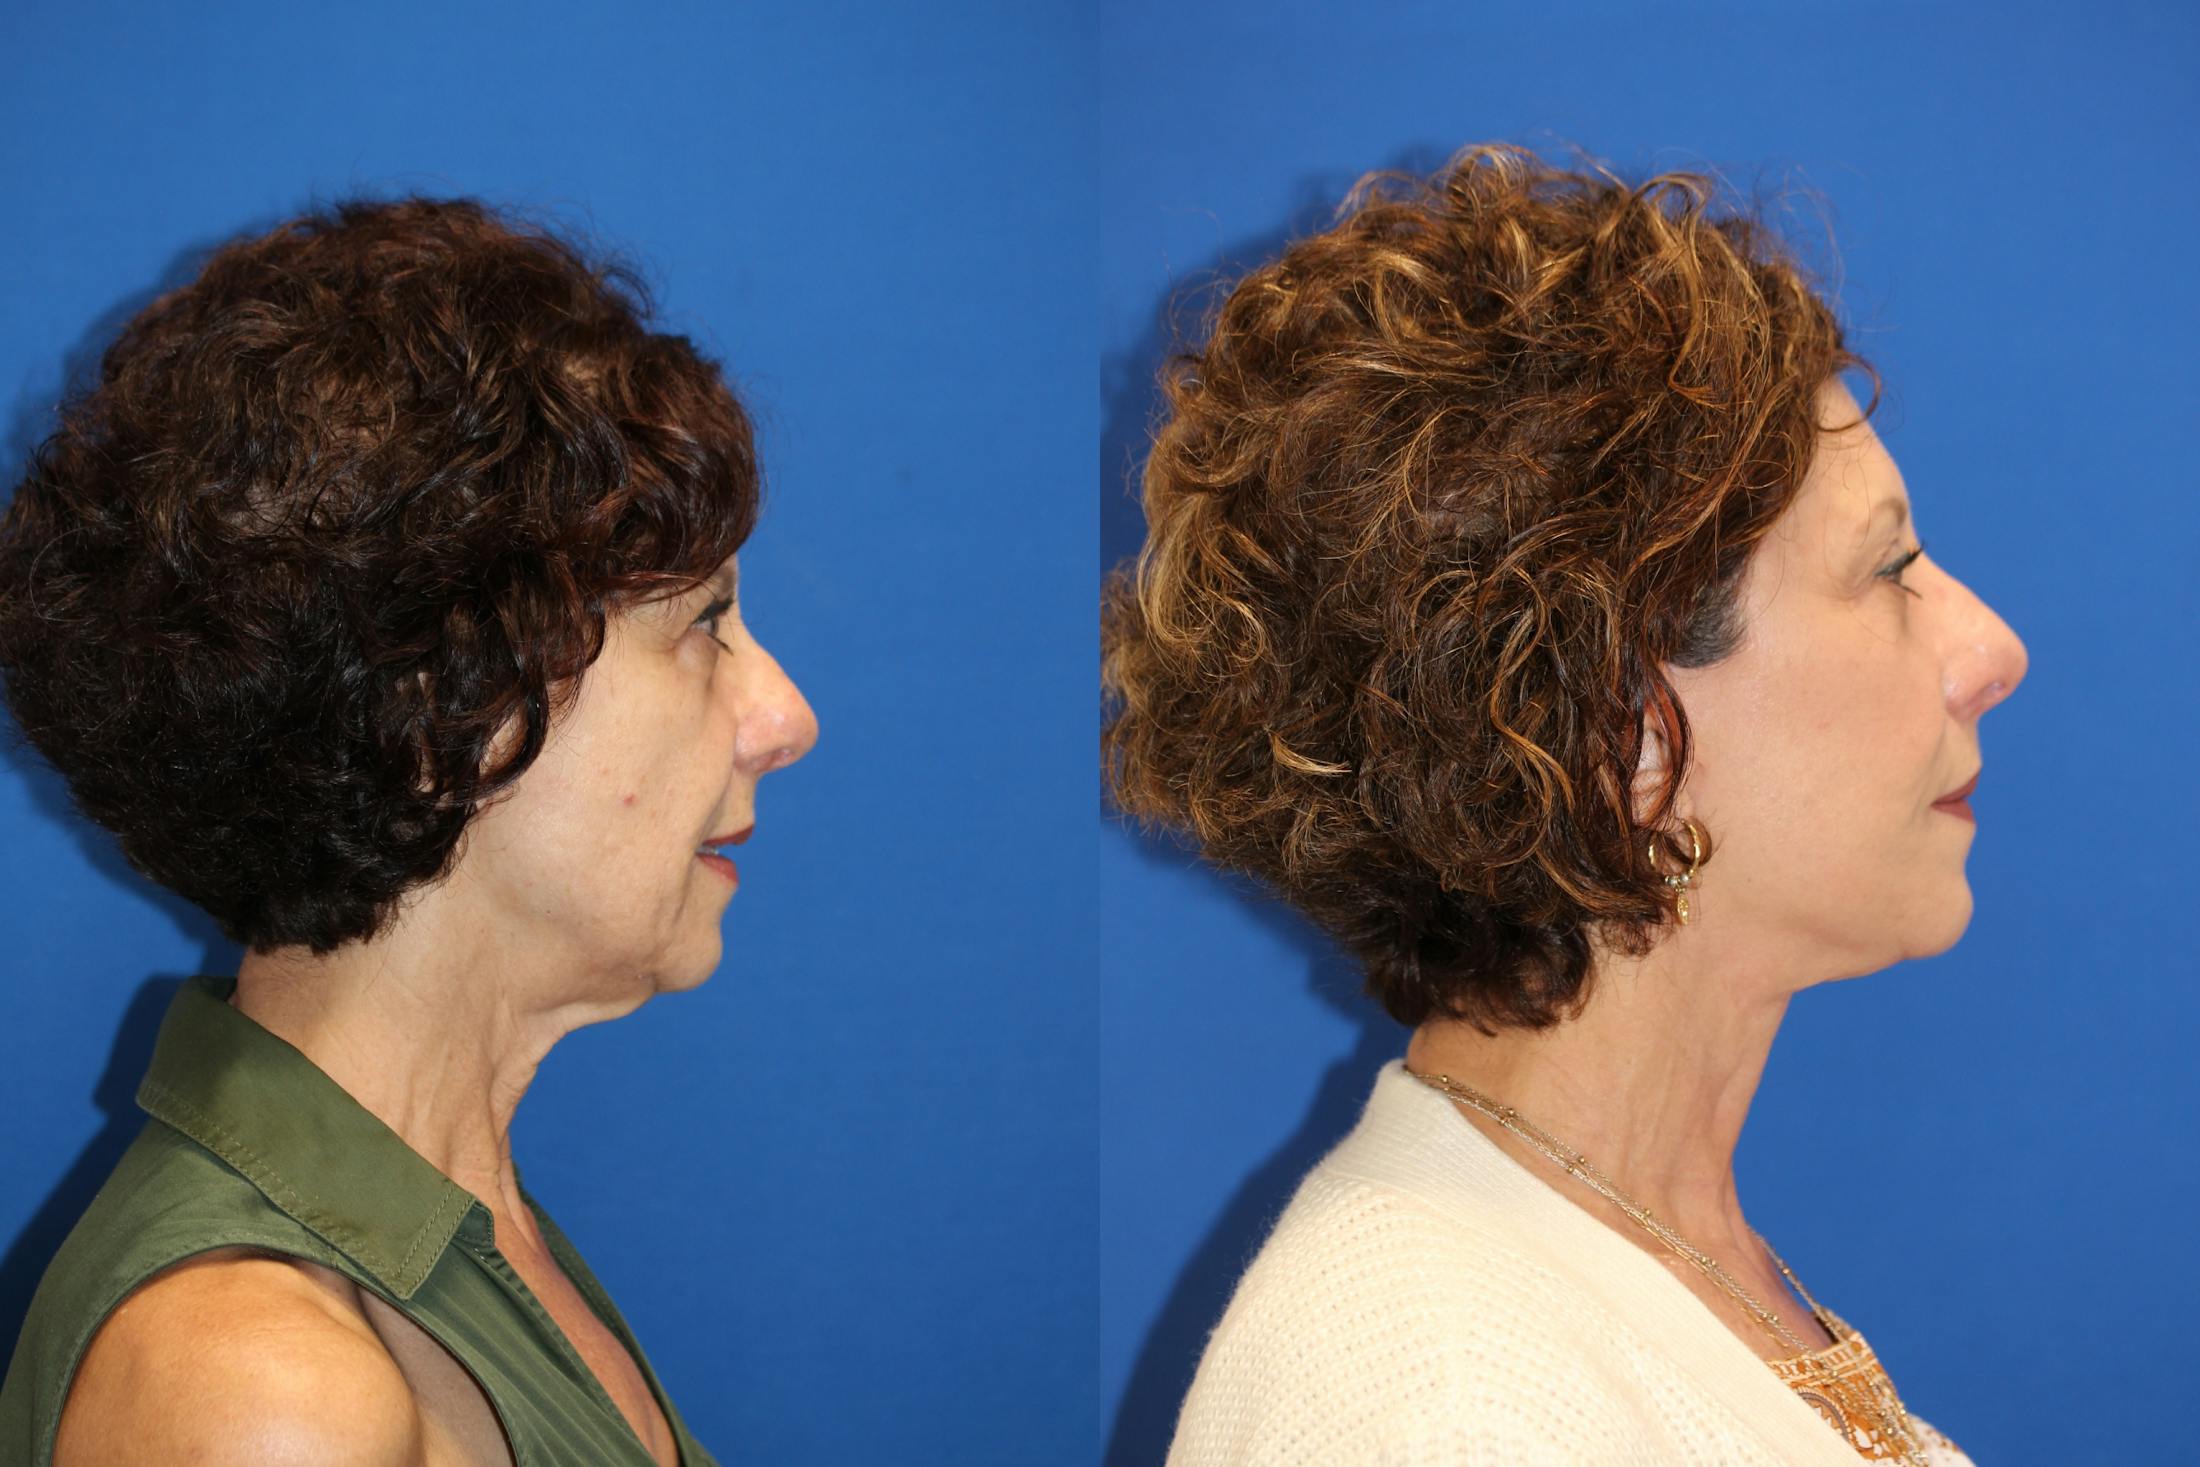 Vertical Restore® / Facial Rejuvenation Before & After Gallery - Patient 123065454 - Image 4